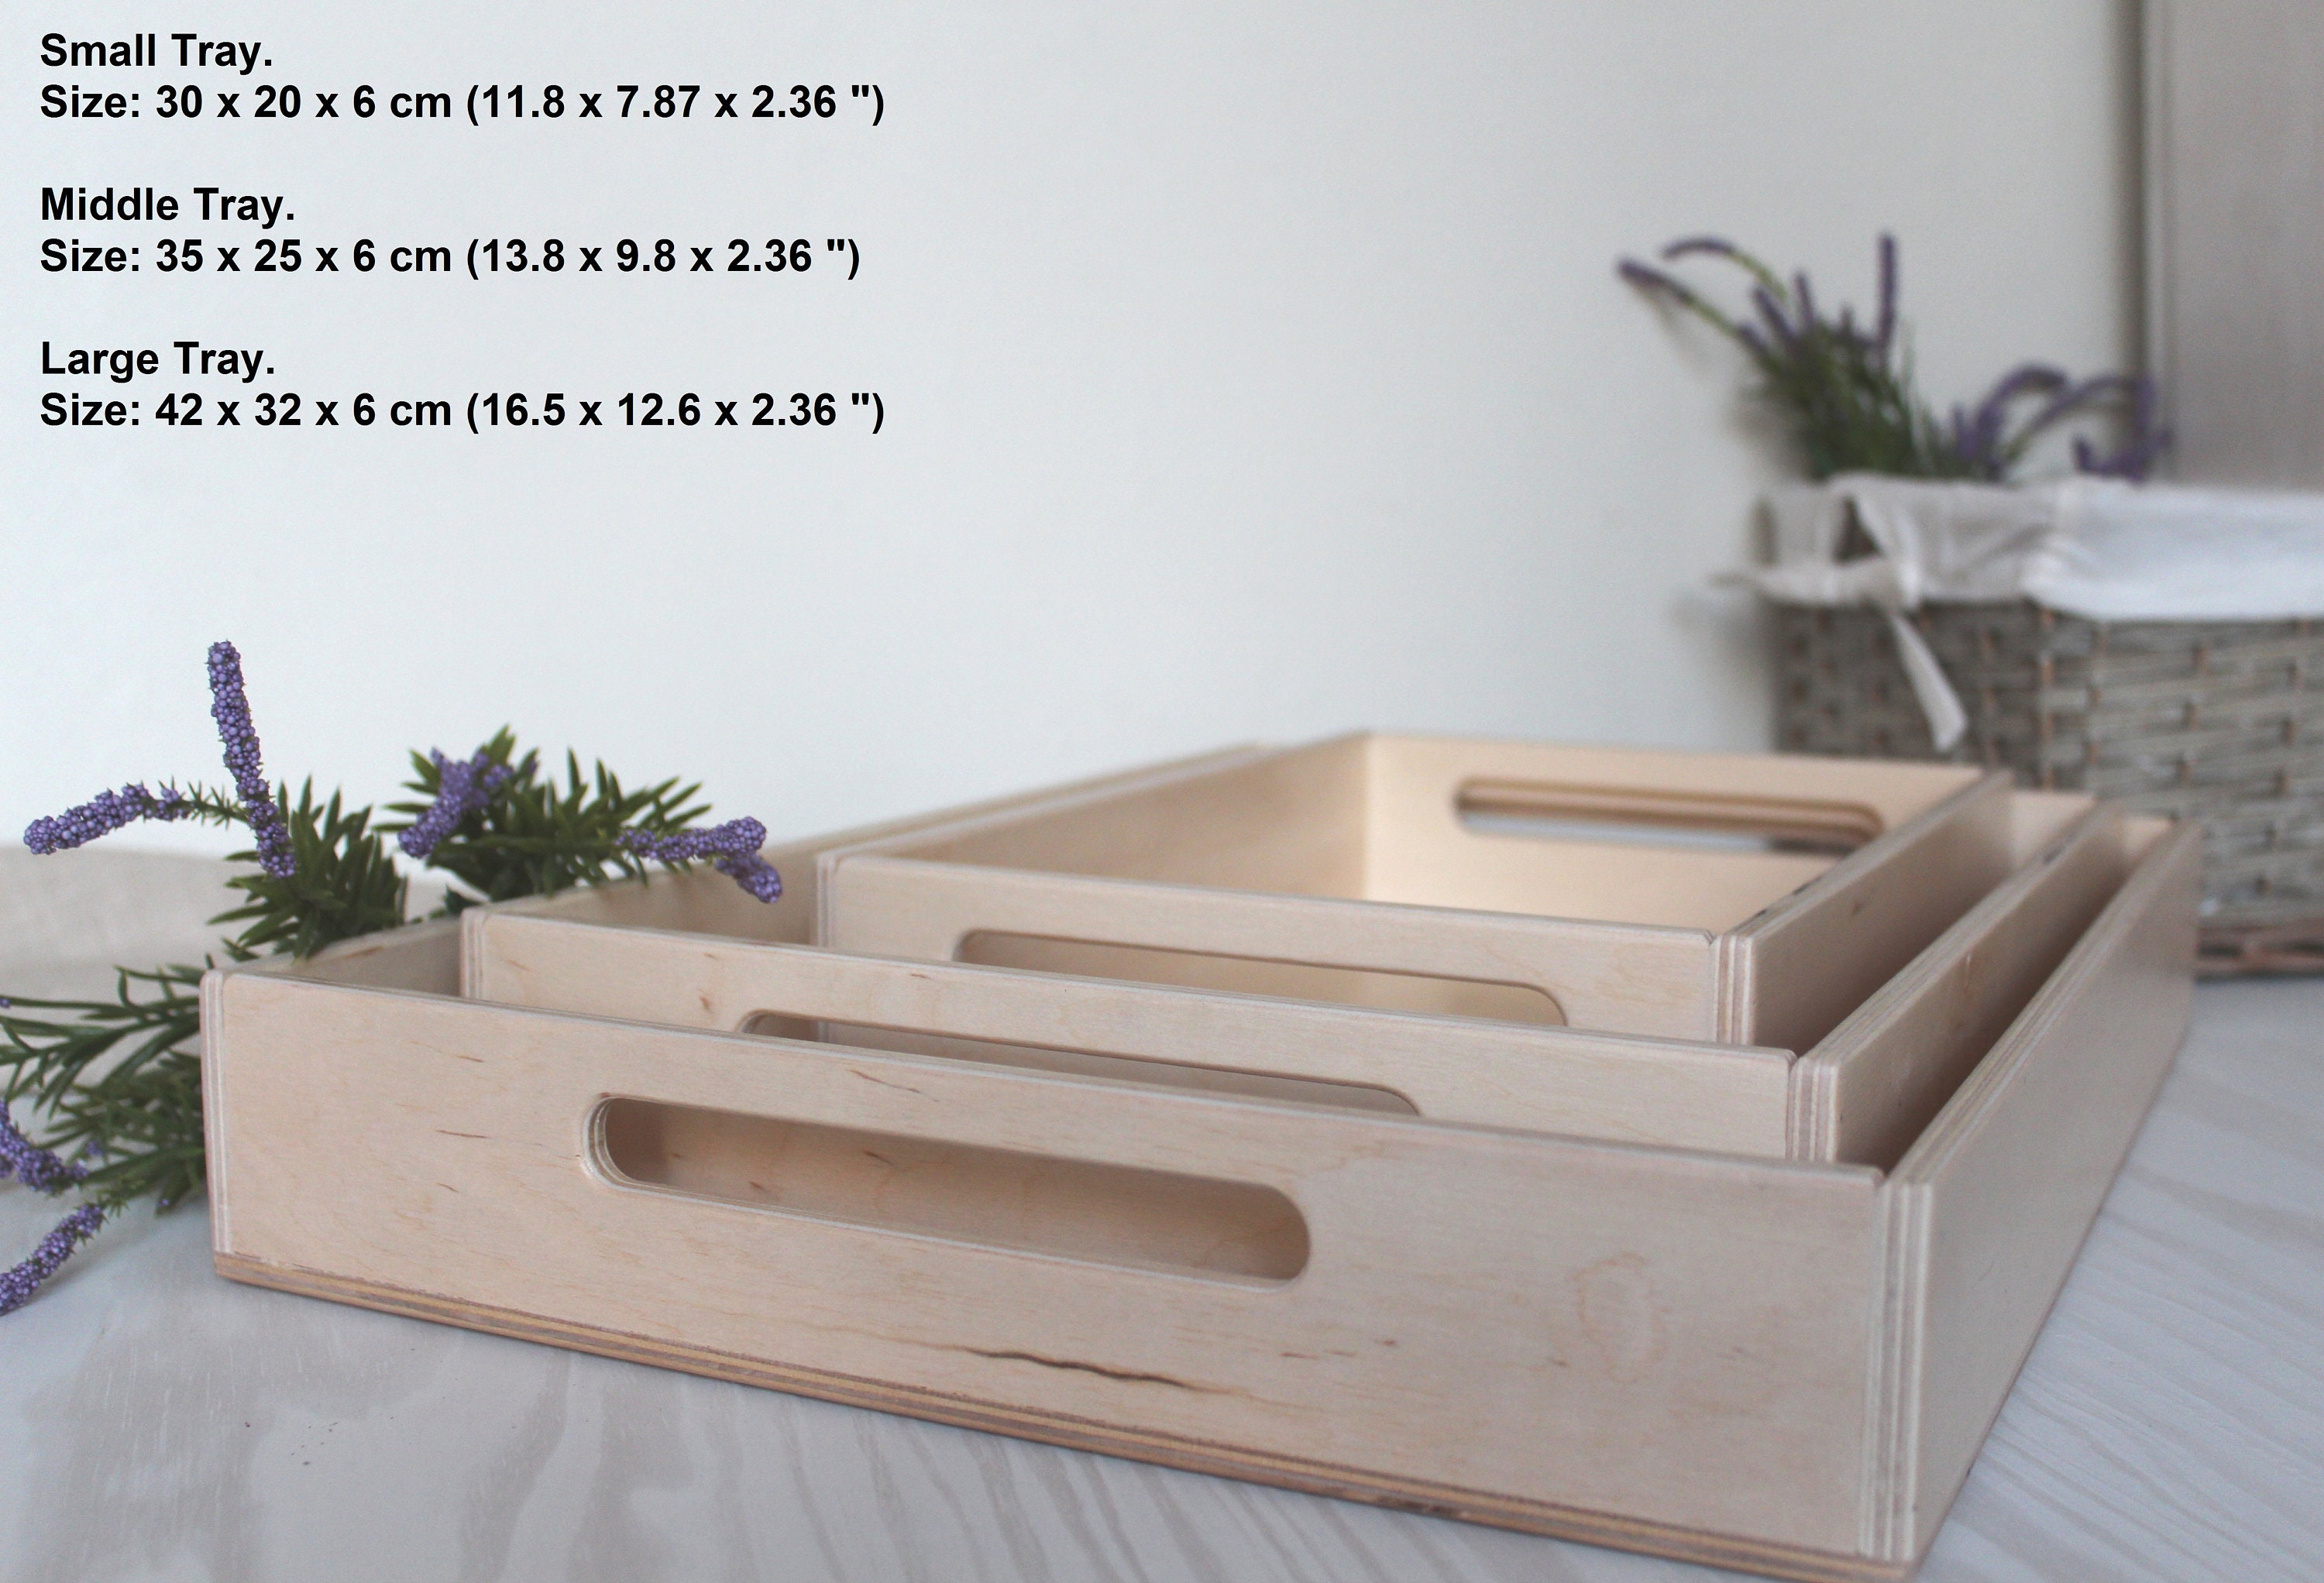 Petit plateau en bois : 11 x 11 x 2 cms - Montessori Spirit